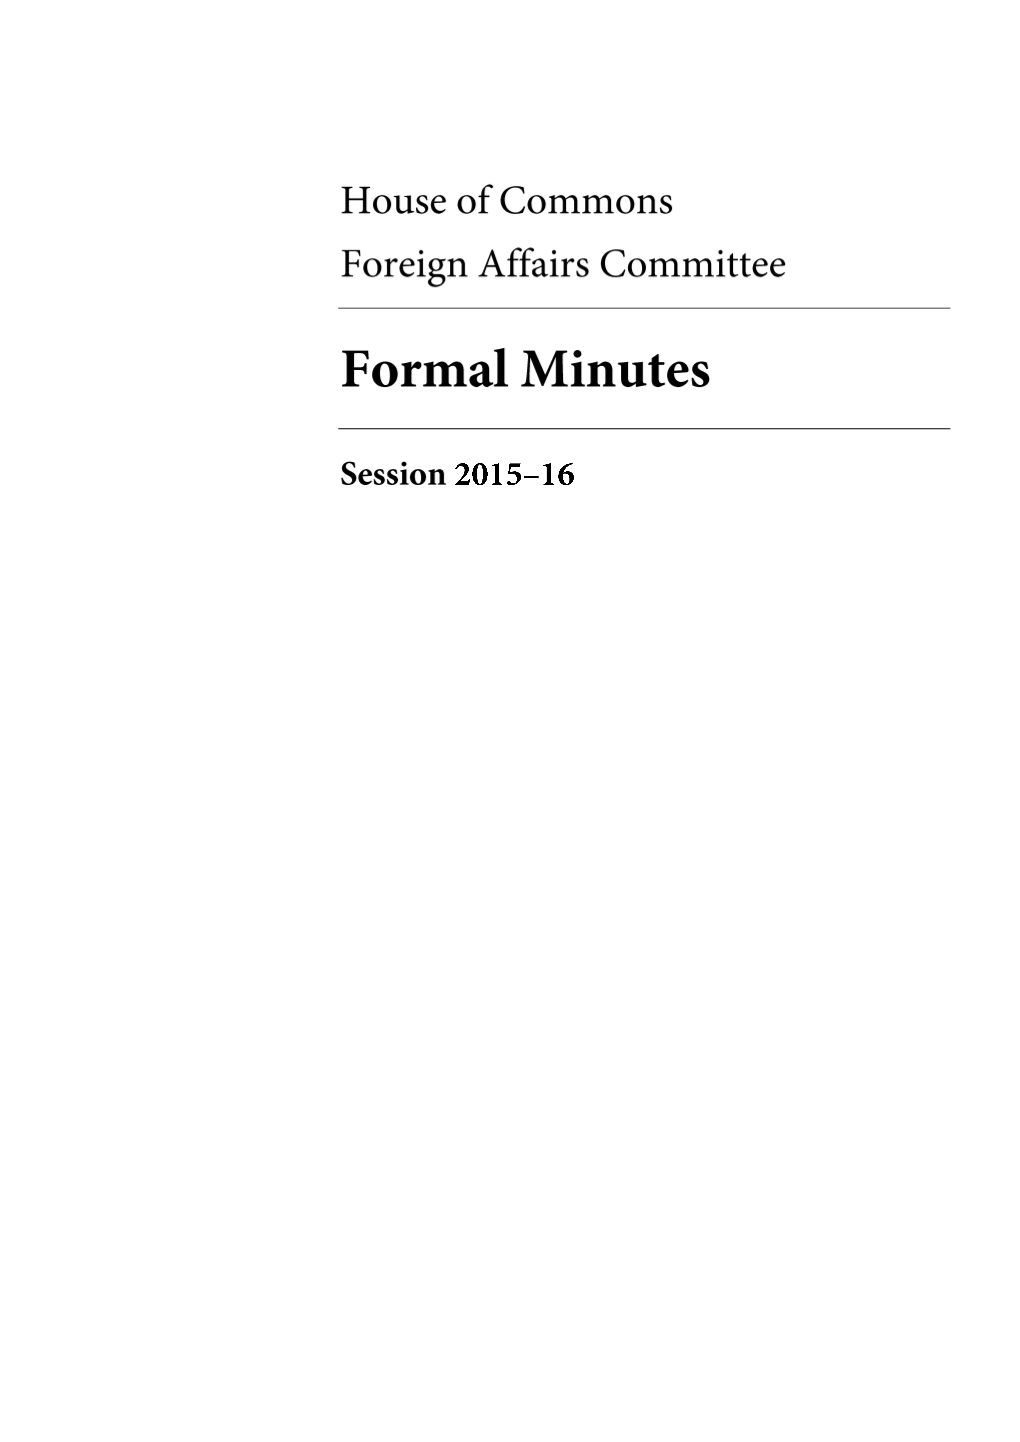 Formal Minutes 2015-16